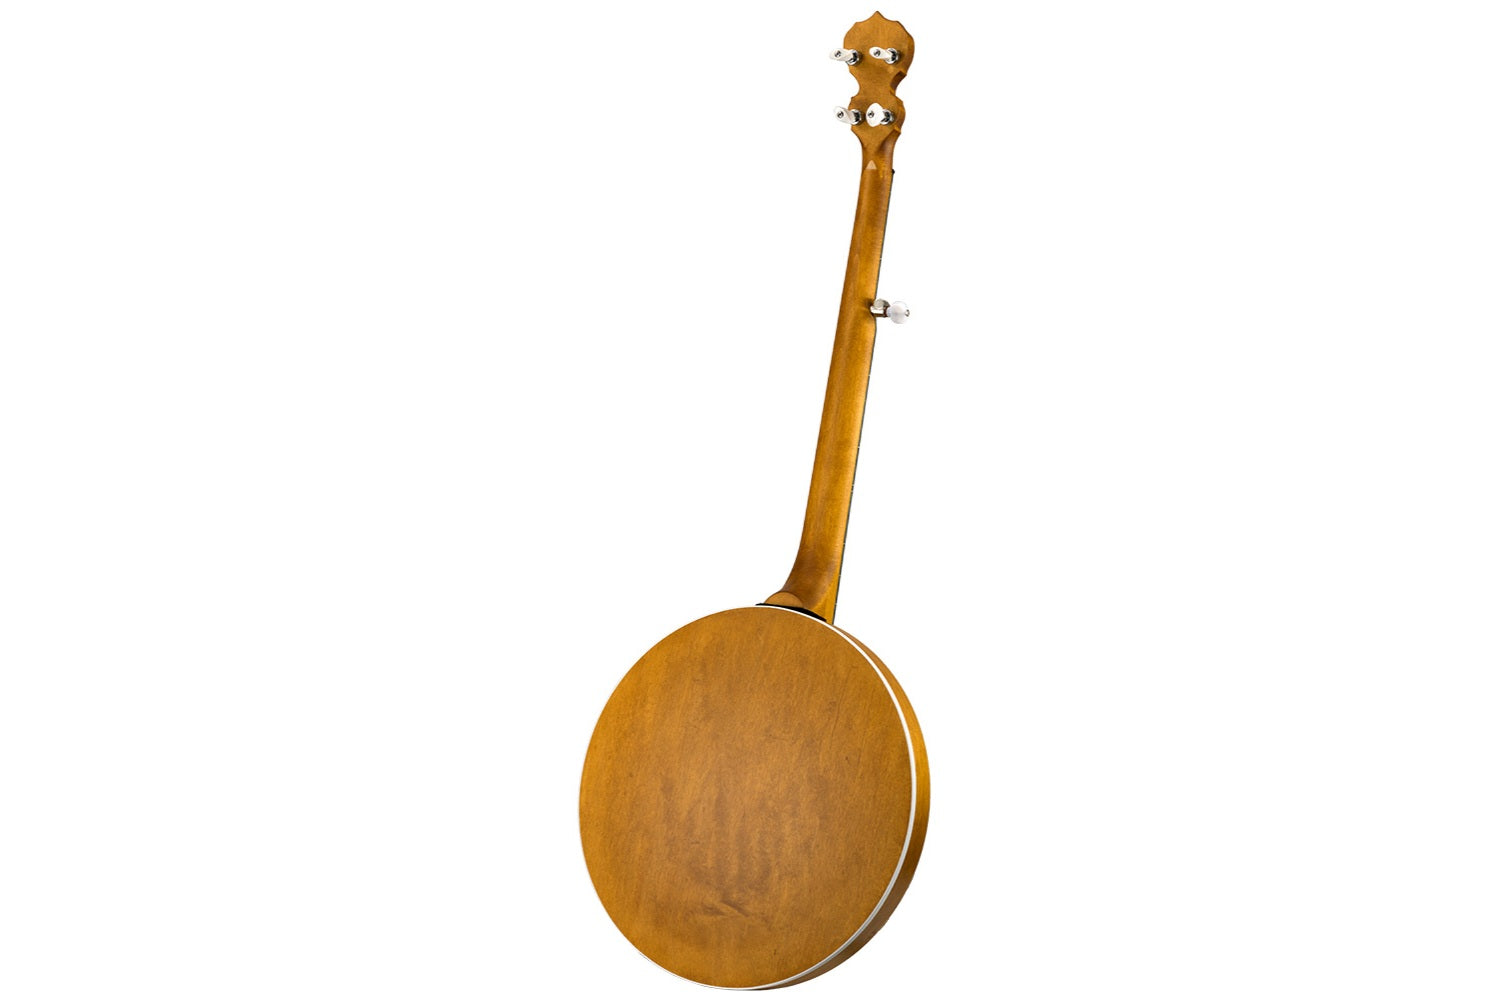 Luxembourg Charity Banjo